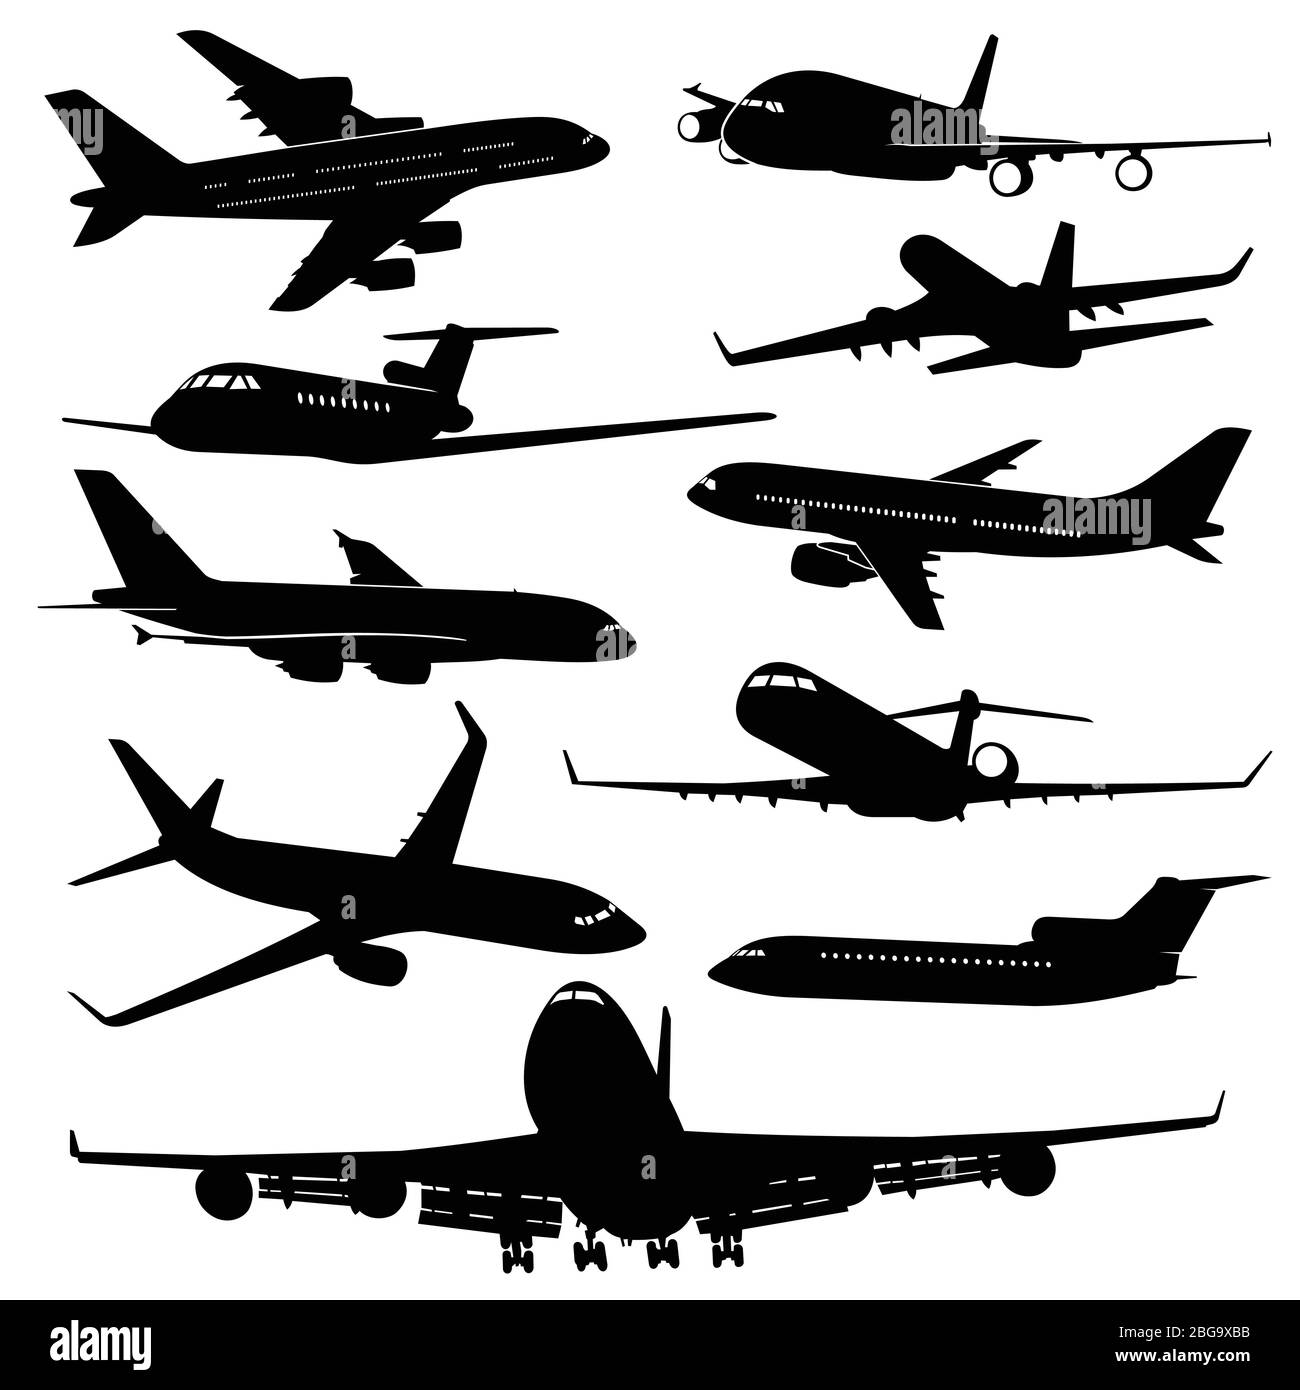 Flugzeug, Flugzeug Jet Vektor Silhouetten. Satz von Flugzeug monochrom schwarz, Transport-und Reise-Illustration Stock Vektor